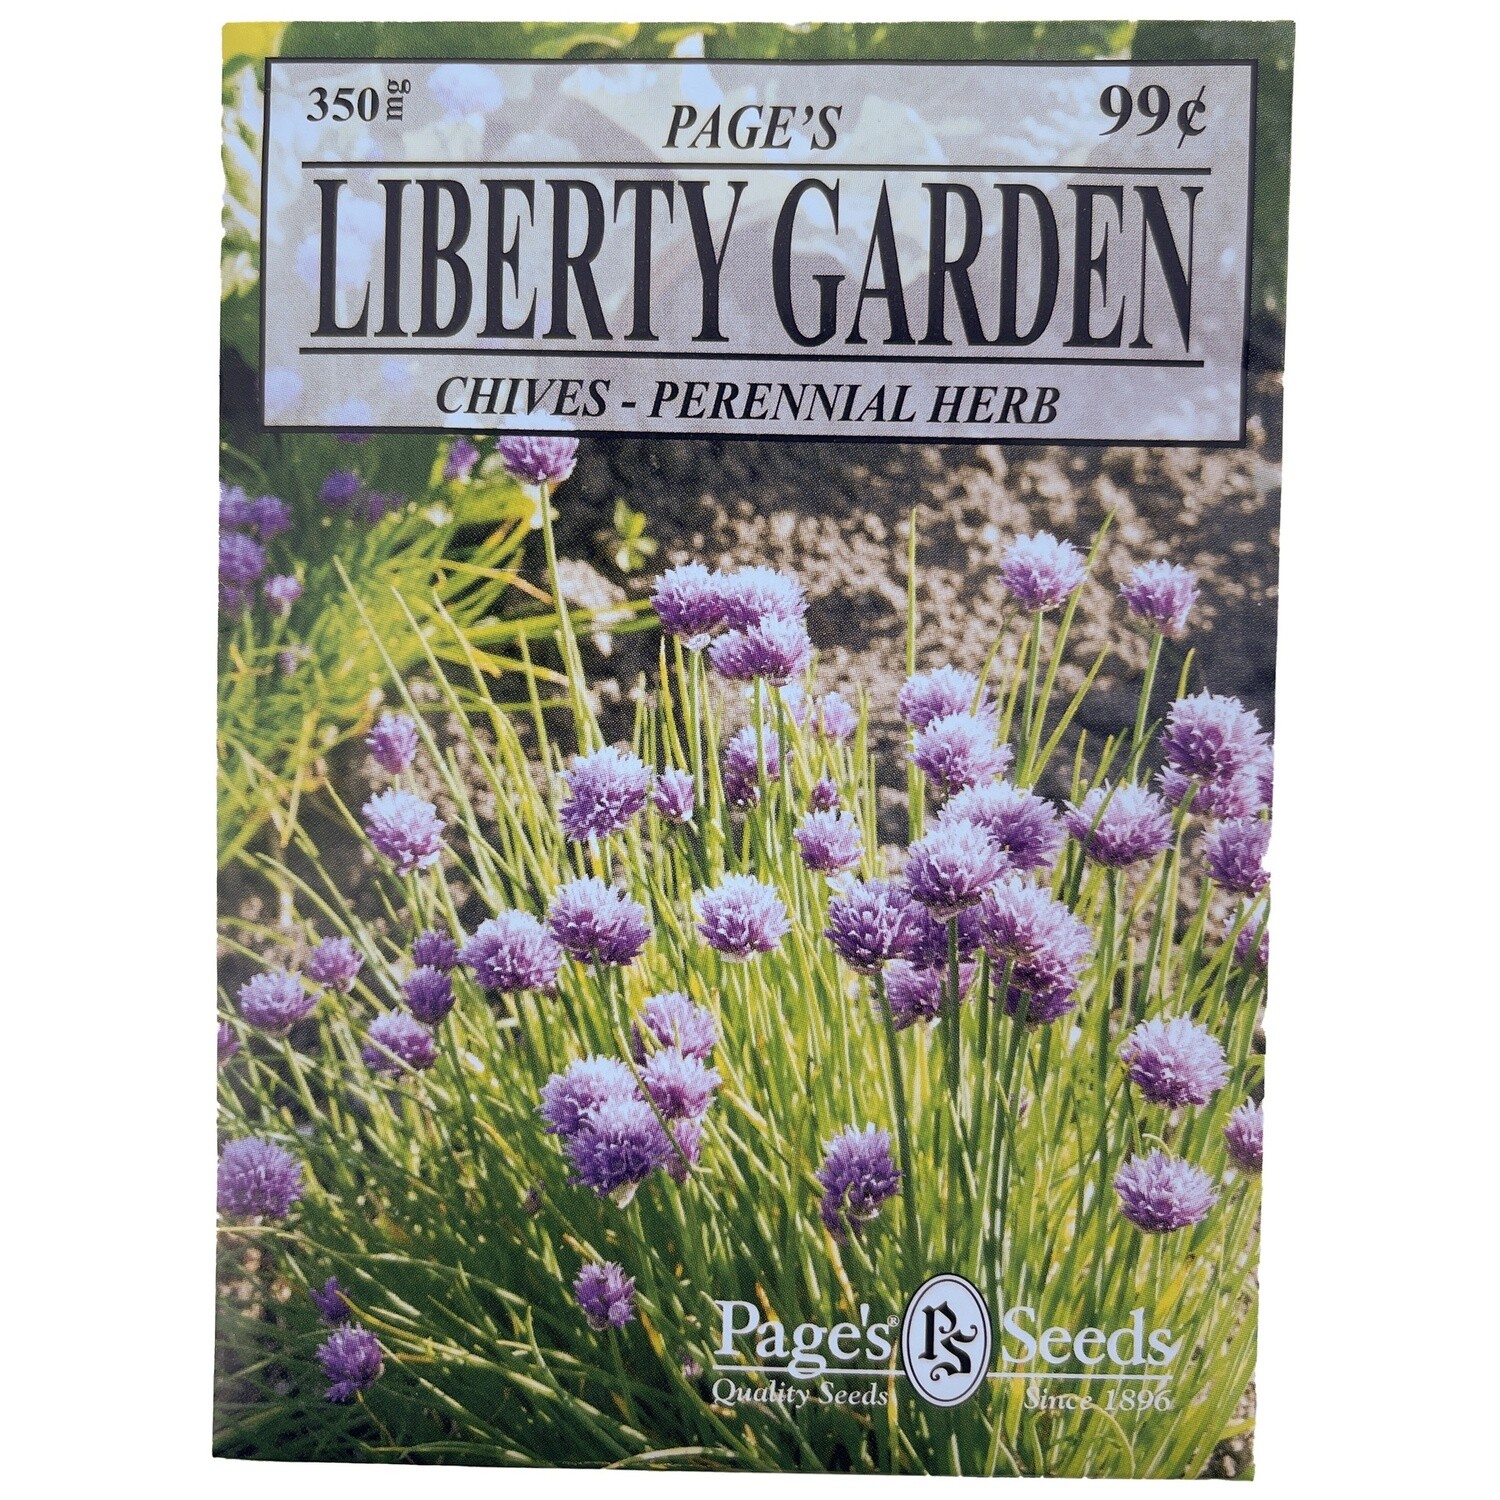 Liberty Garden Chives (Perennial Herb) 350mg